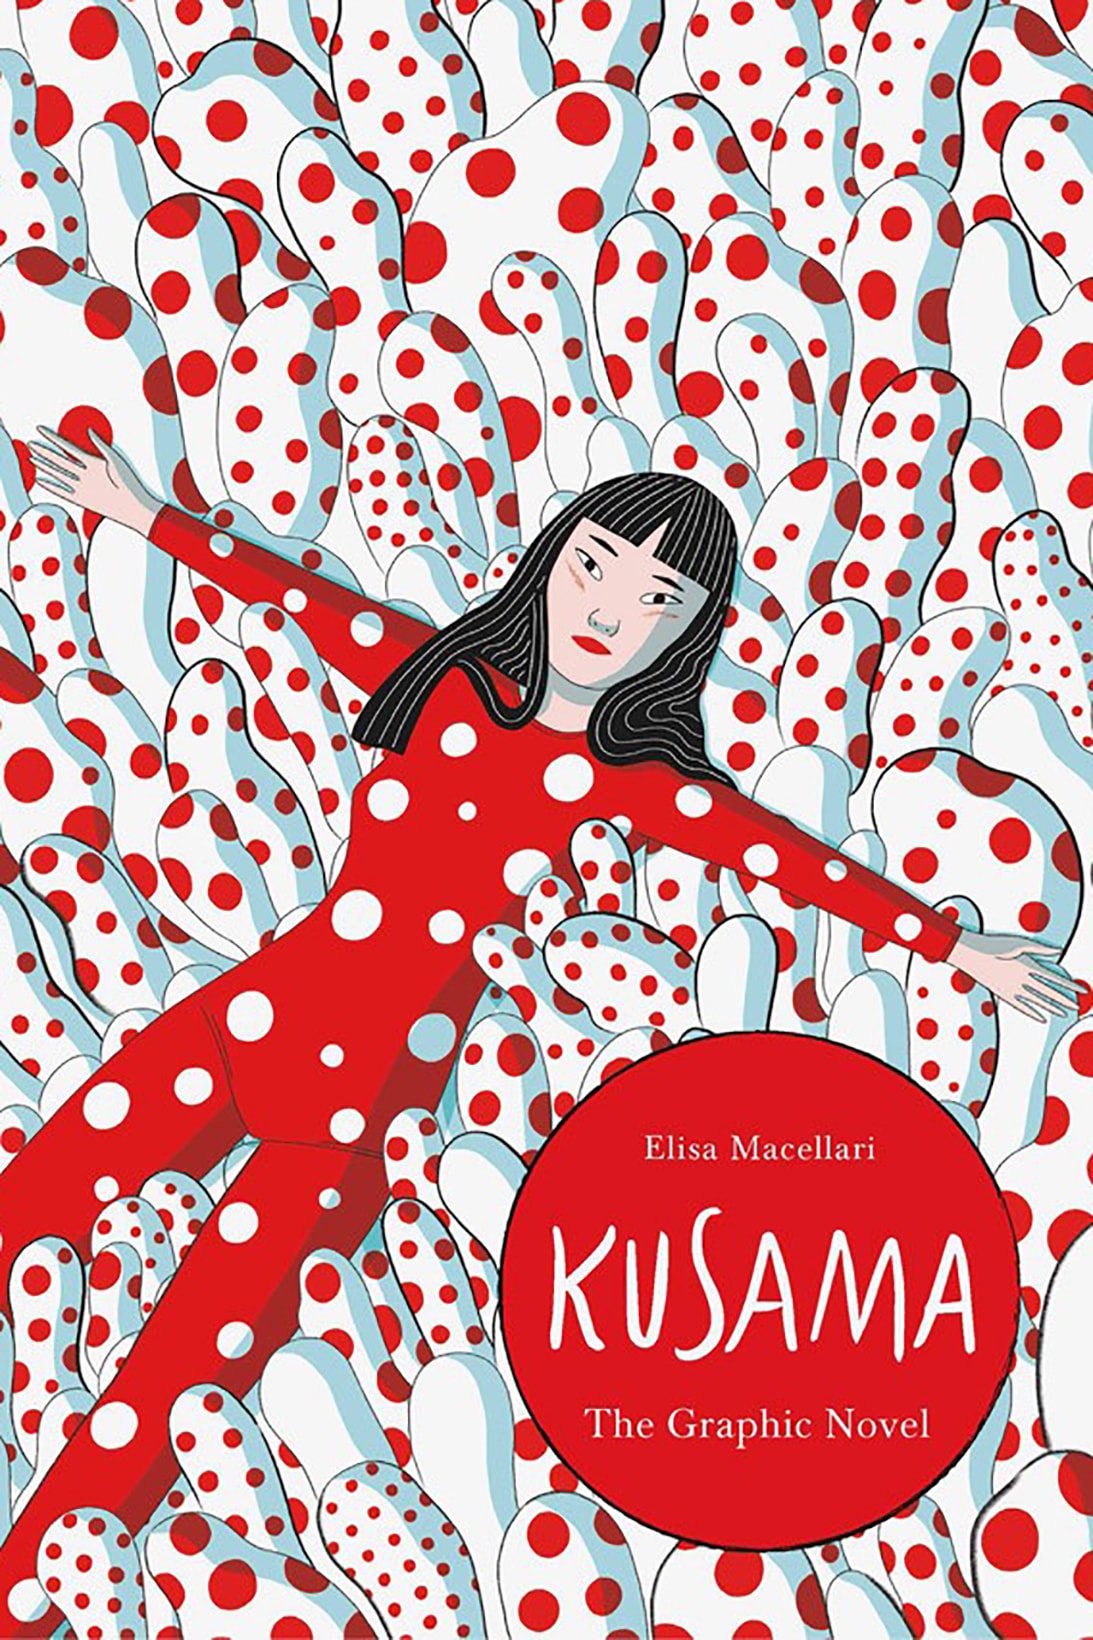 yayoi kusama graphic biography novel elisa macellari